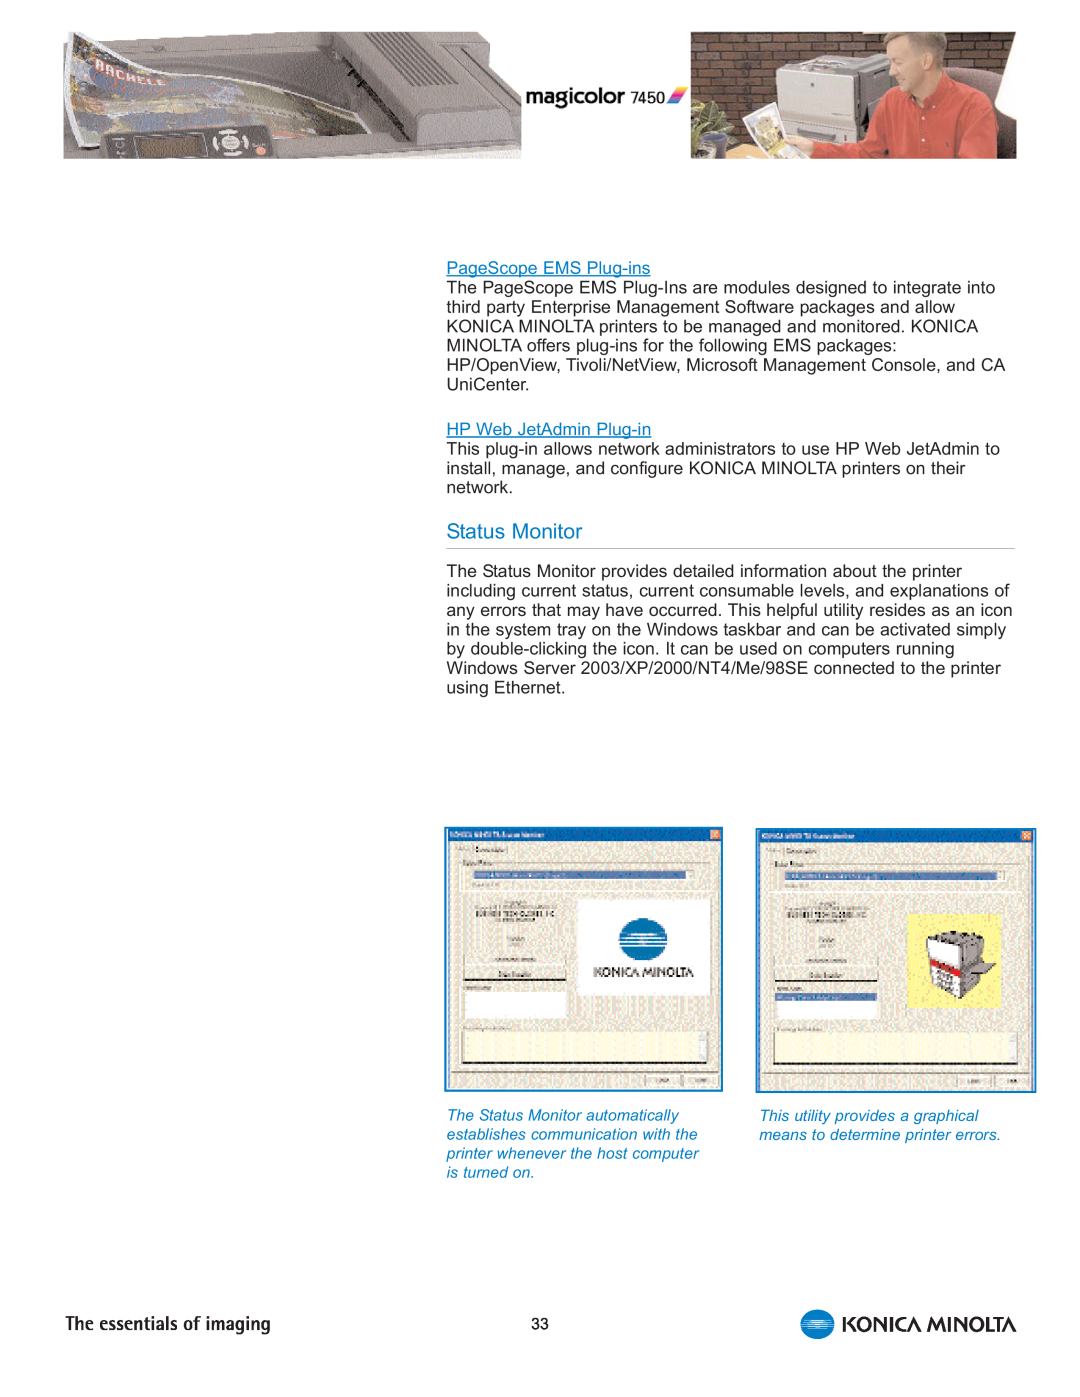 Konica Minolta 7450 manual Status Monitor, PageScope EMS Plug-ins, HP Web JetAdmin Plug-in 